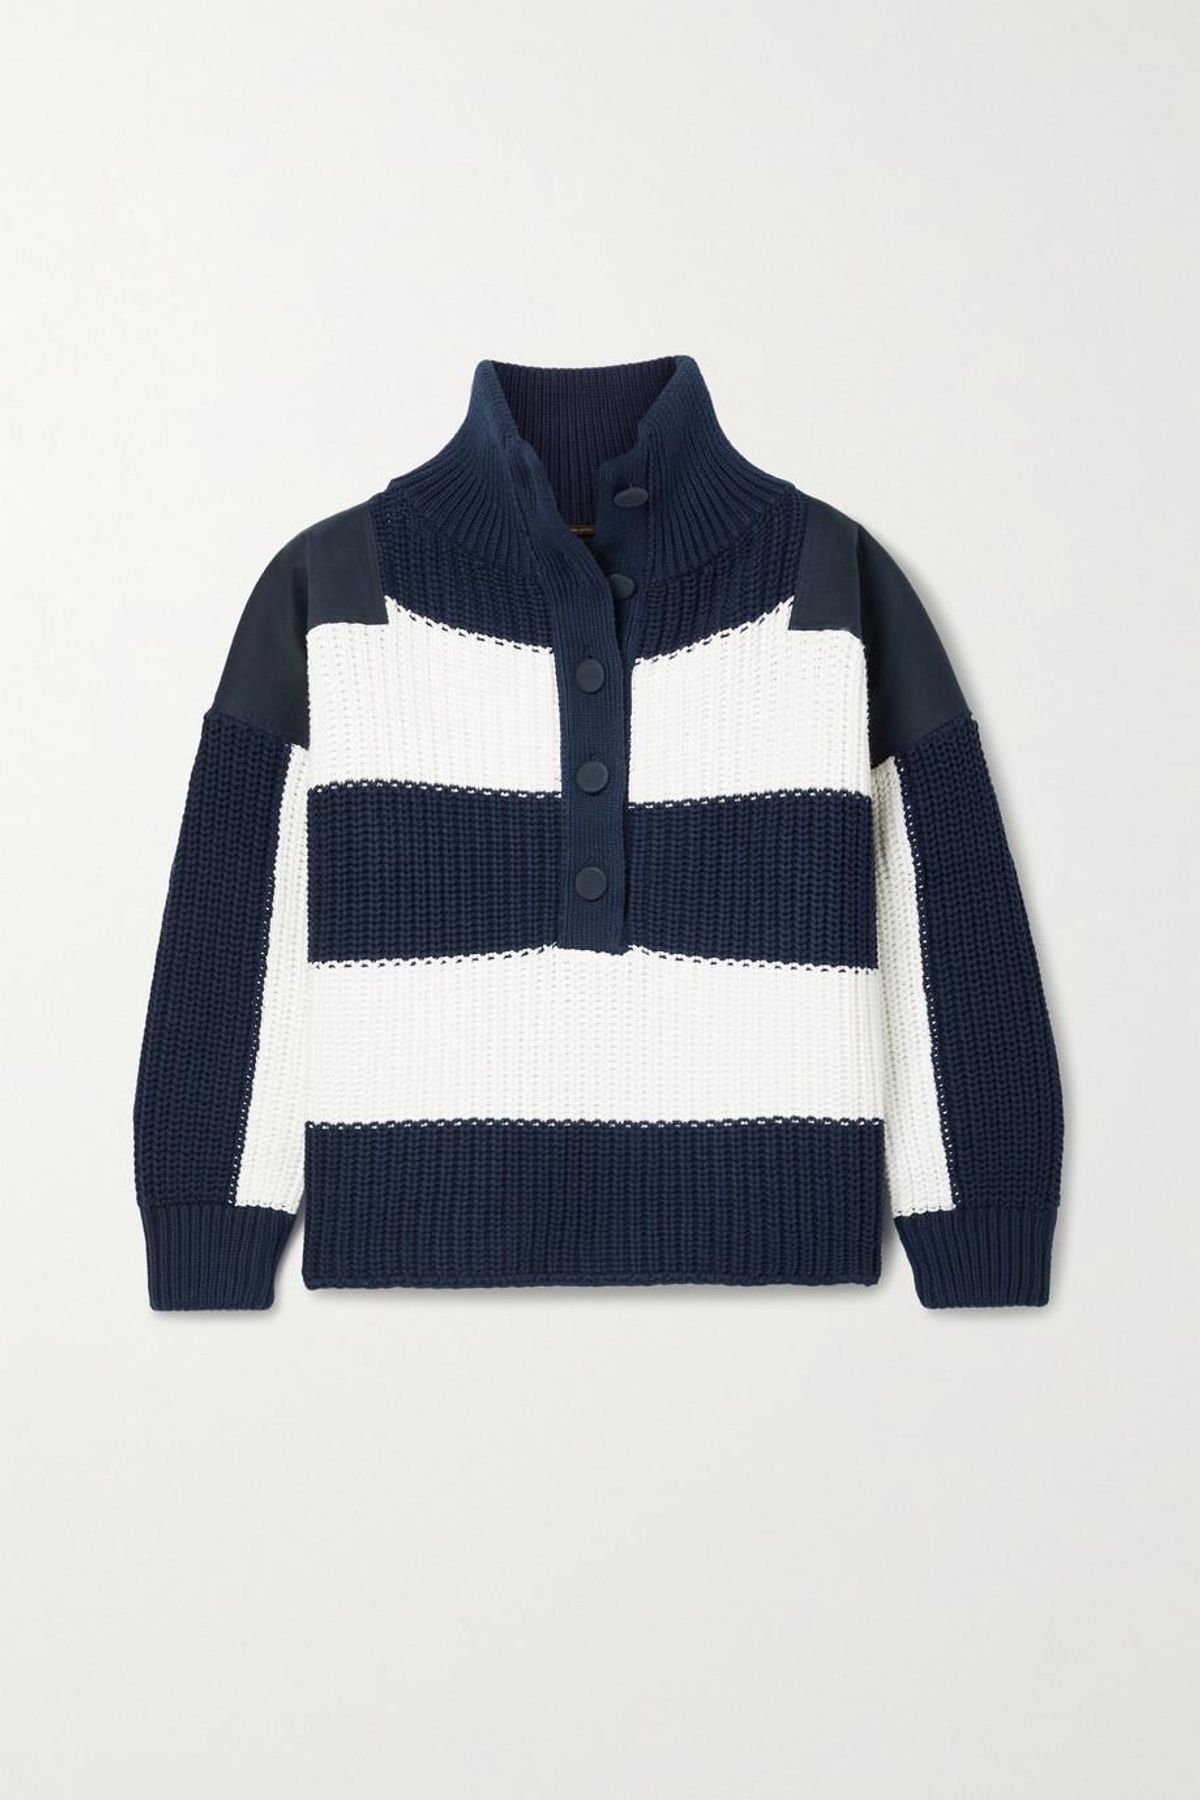 adam lippes oversized twill paneled striped ribbed cotton sweater